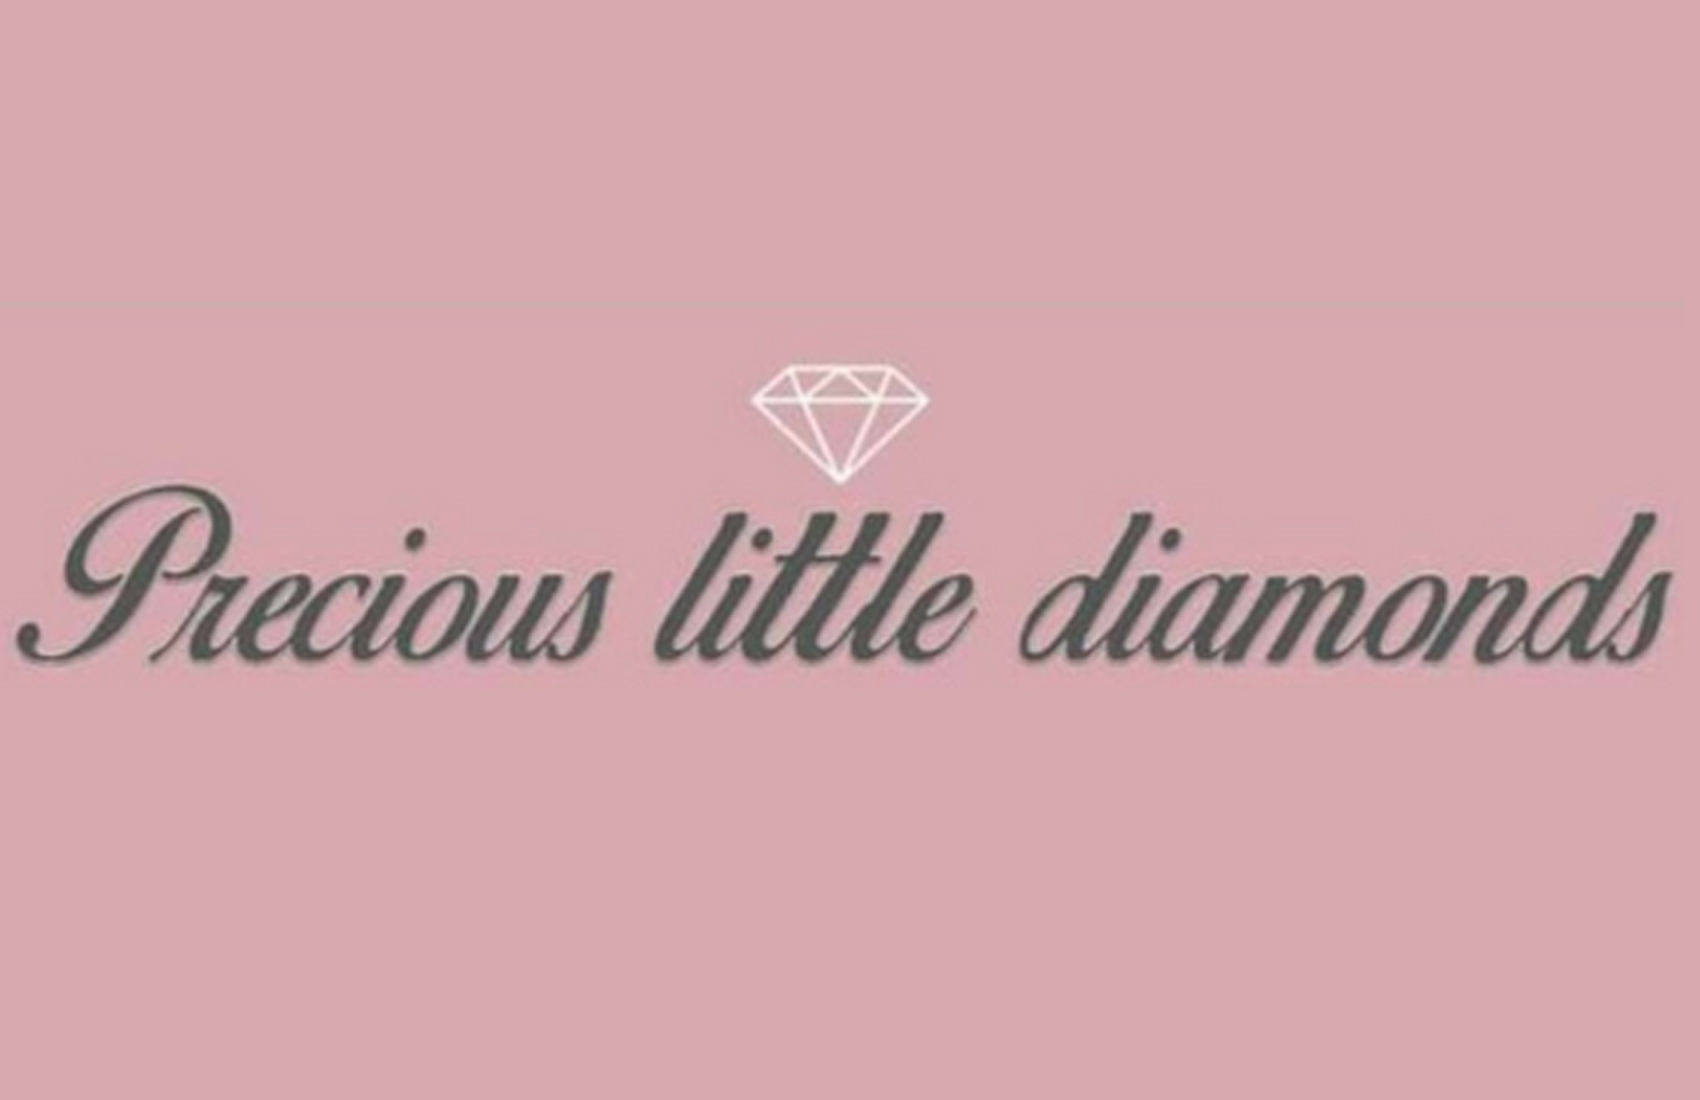 Precious little diamonds 